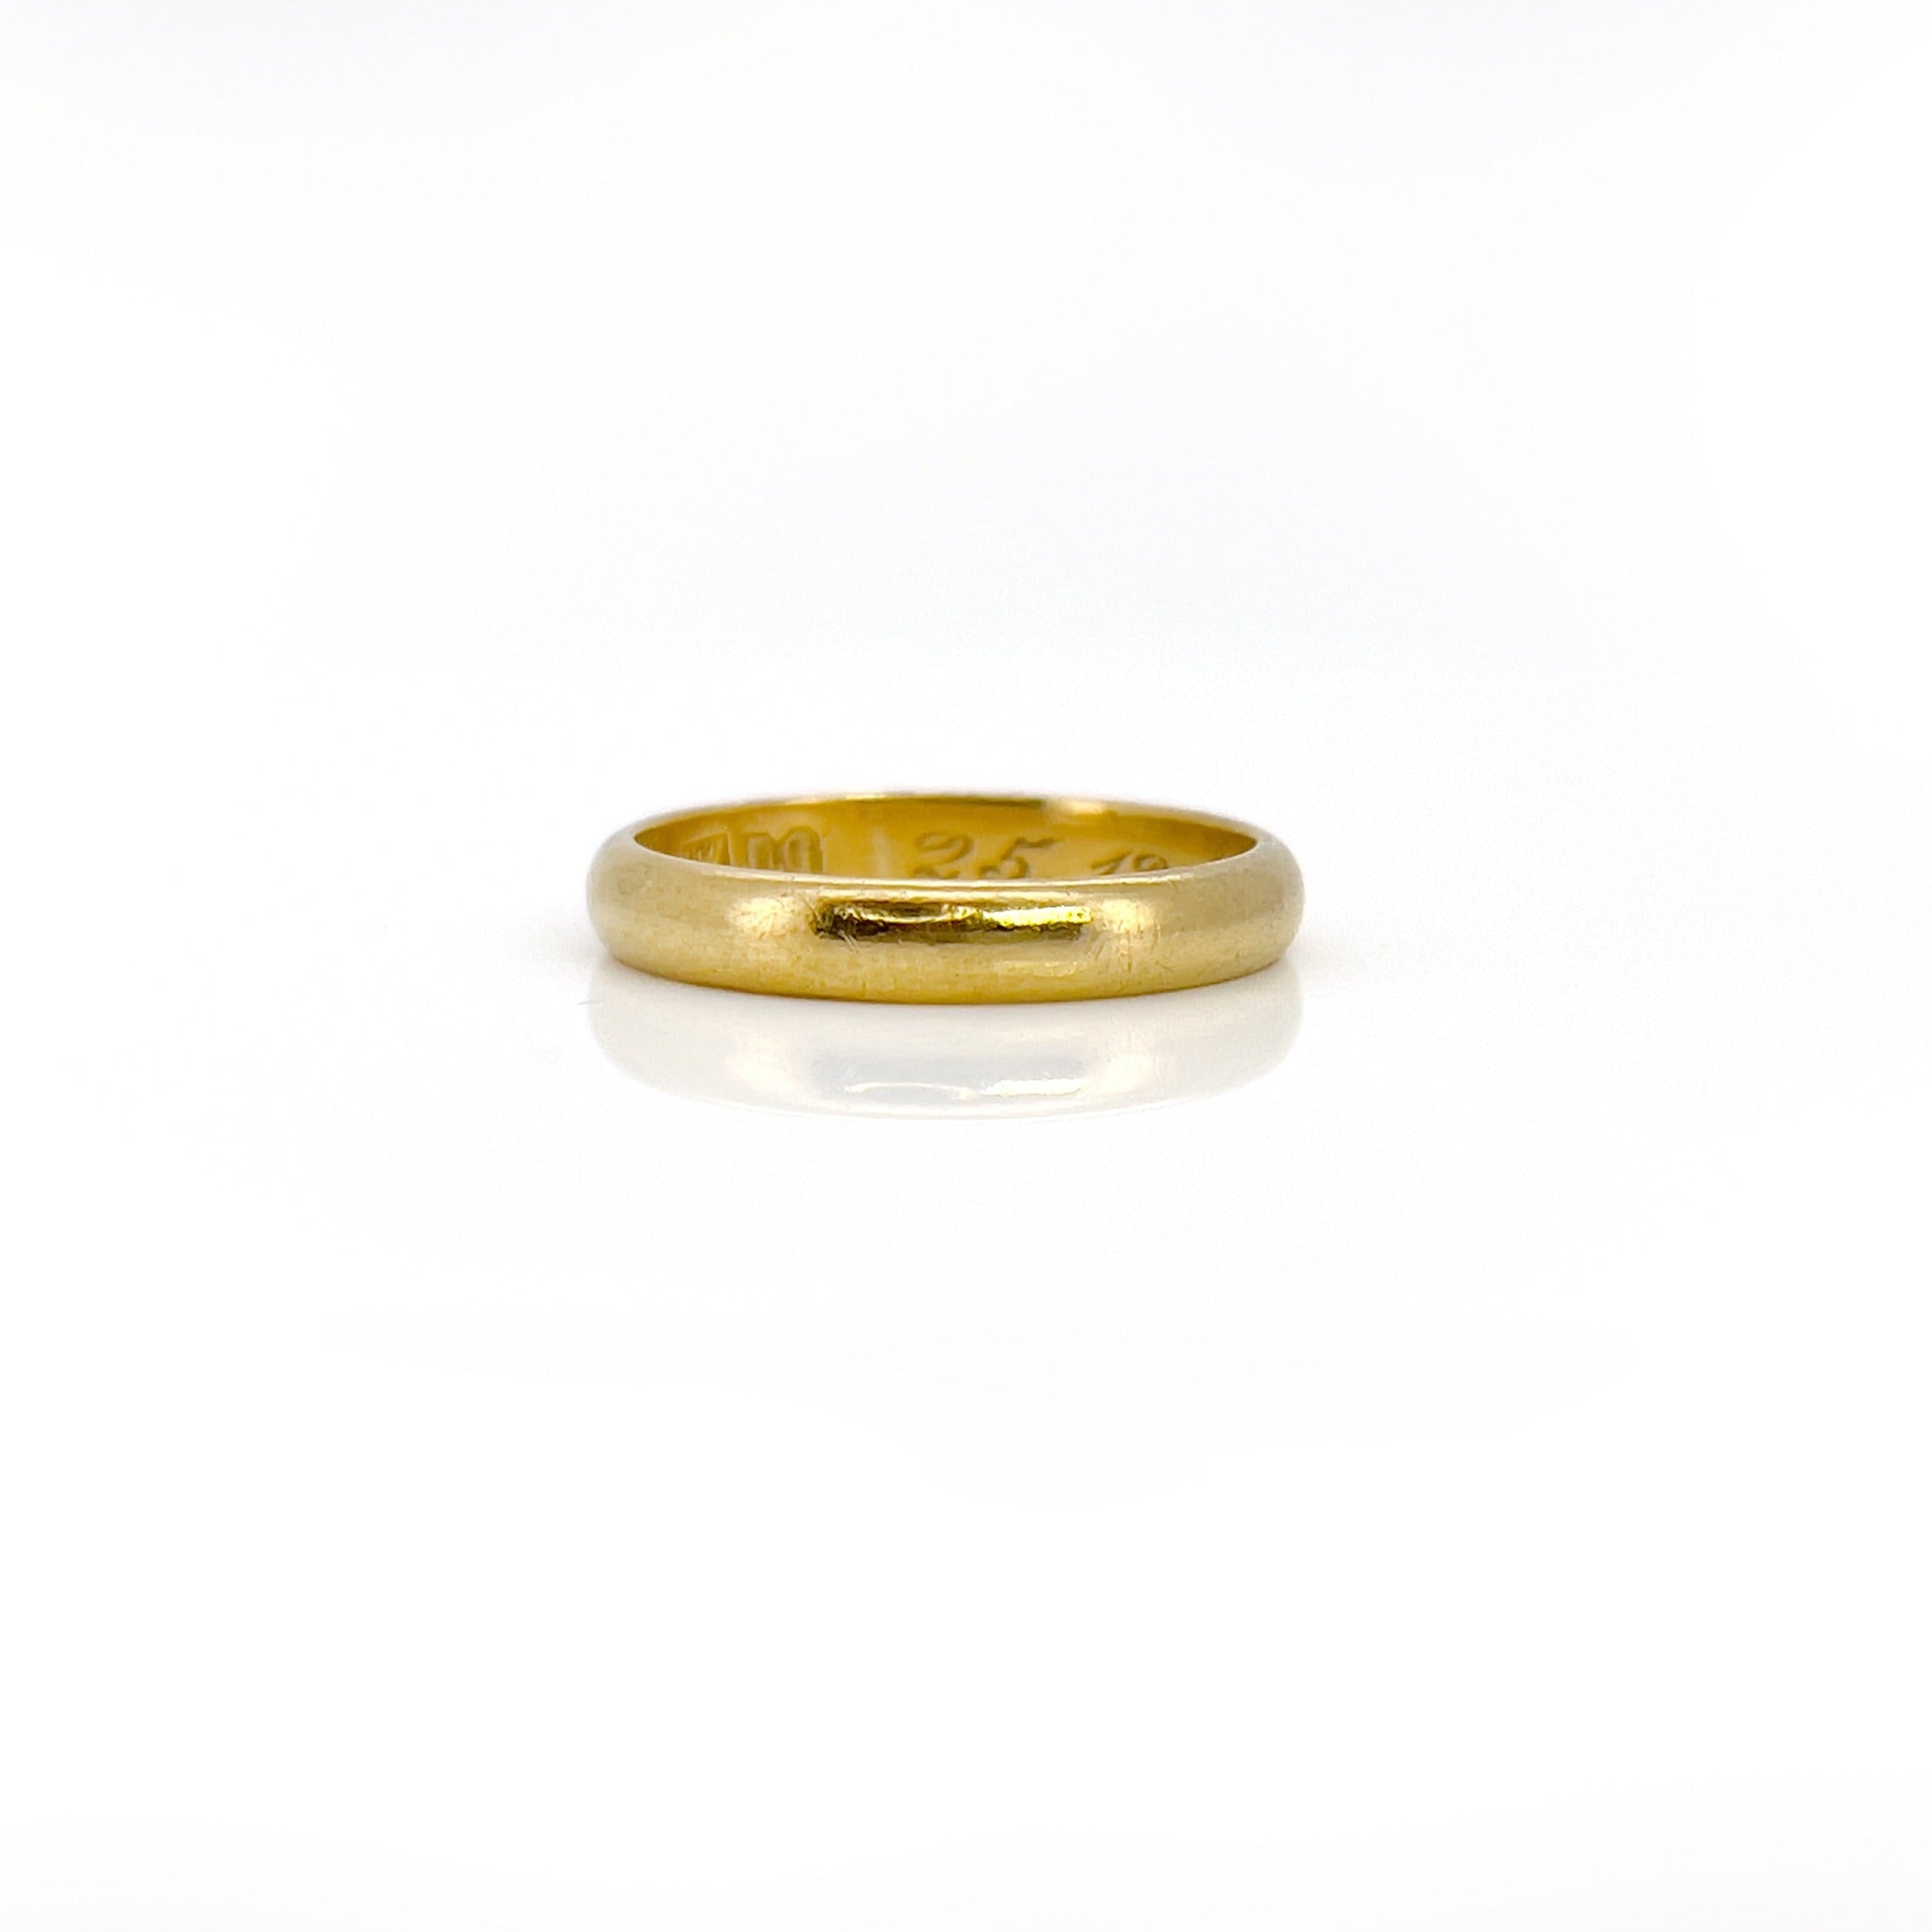 Vintage 22K Yellow Gold Ring, 25.12.31 Hans- Wrick, Size 6.75